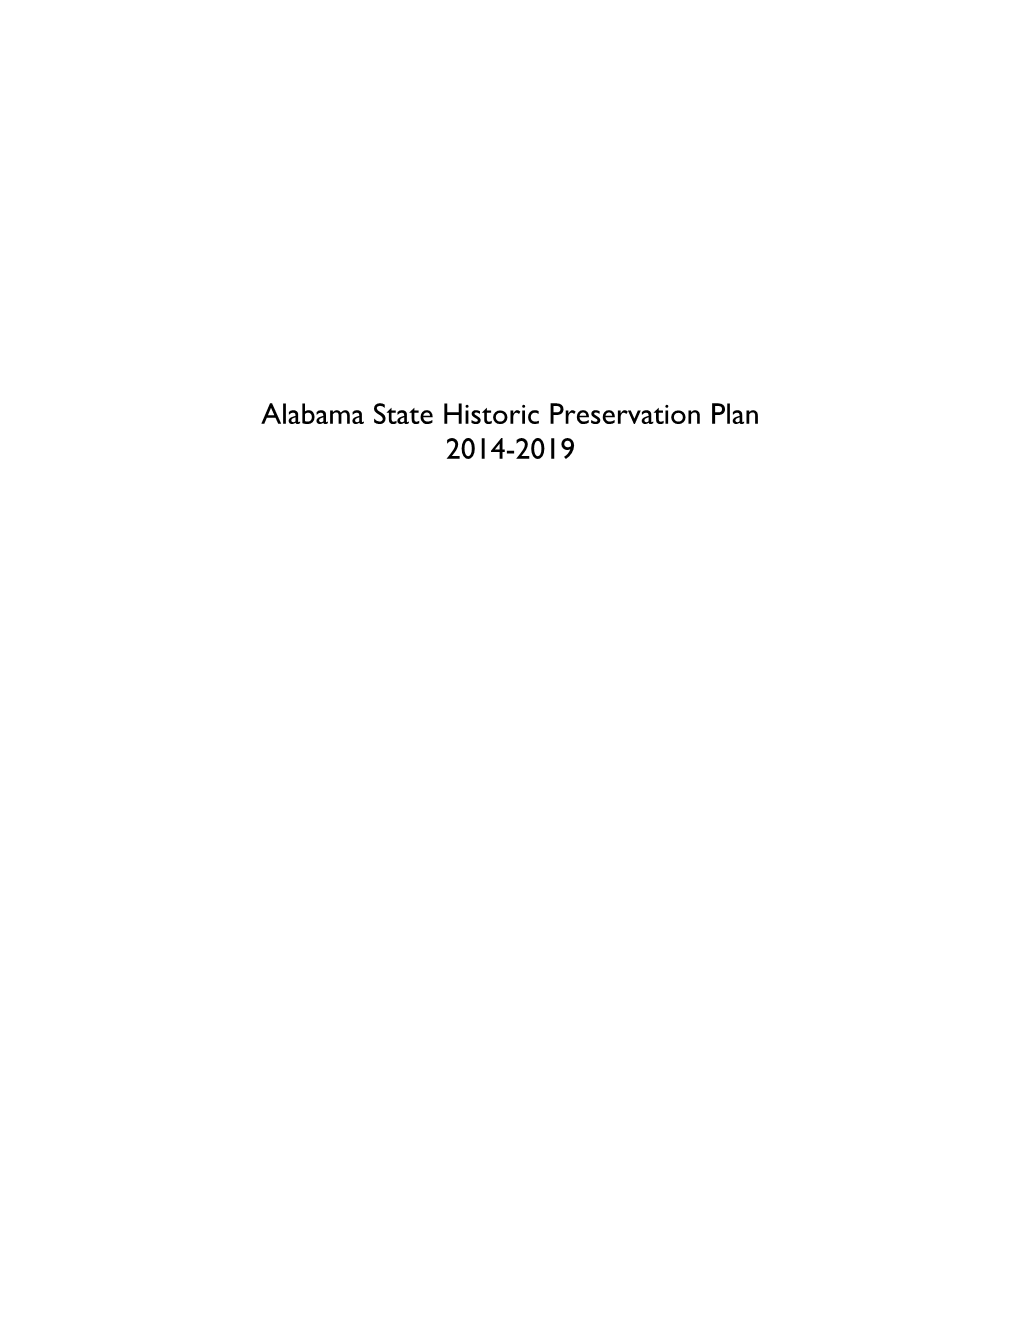 Alabama State Historic Preservation Plan 2014-2019